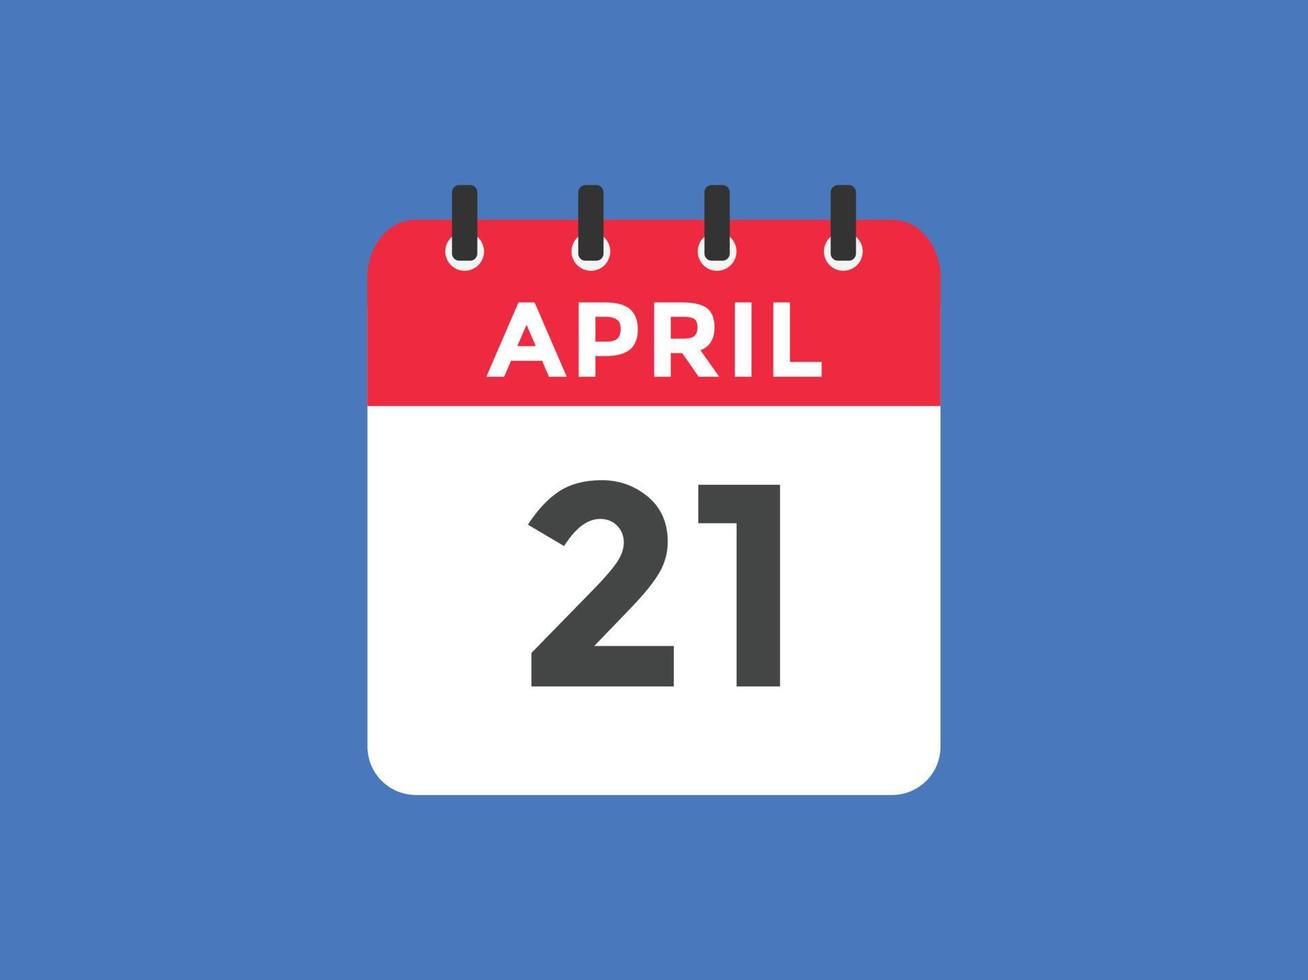 april 21 kalender påminnelse. 21: e april dagligen kalender ikon mall. kalender 21: e april ikon design mall. vektor illustration